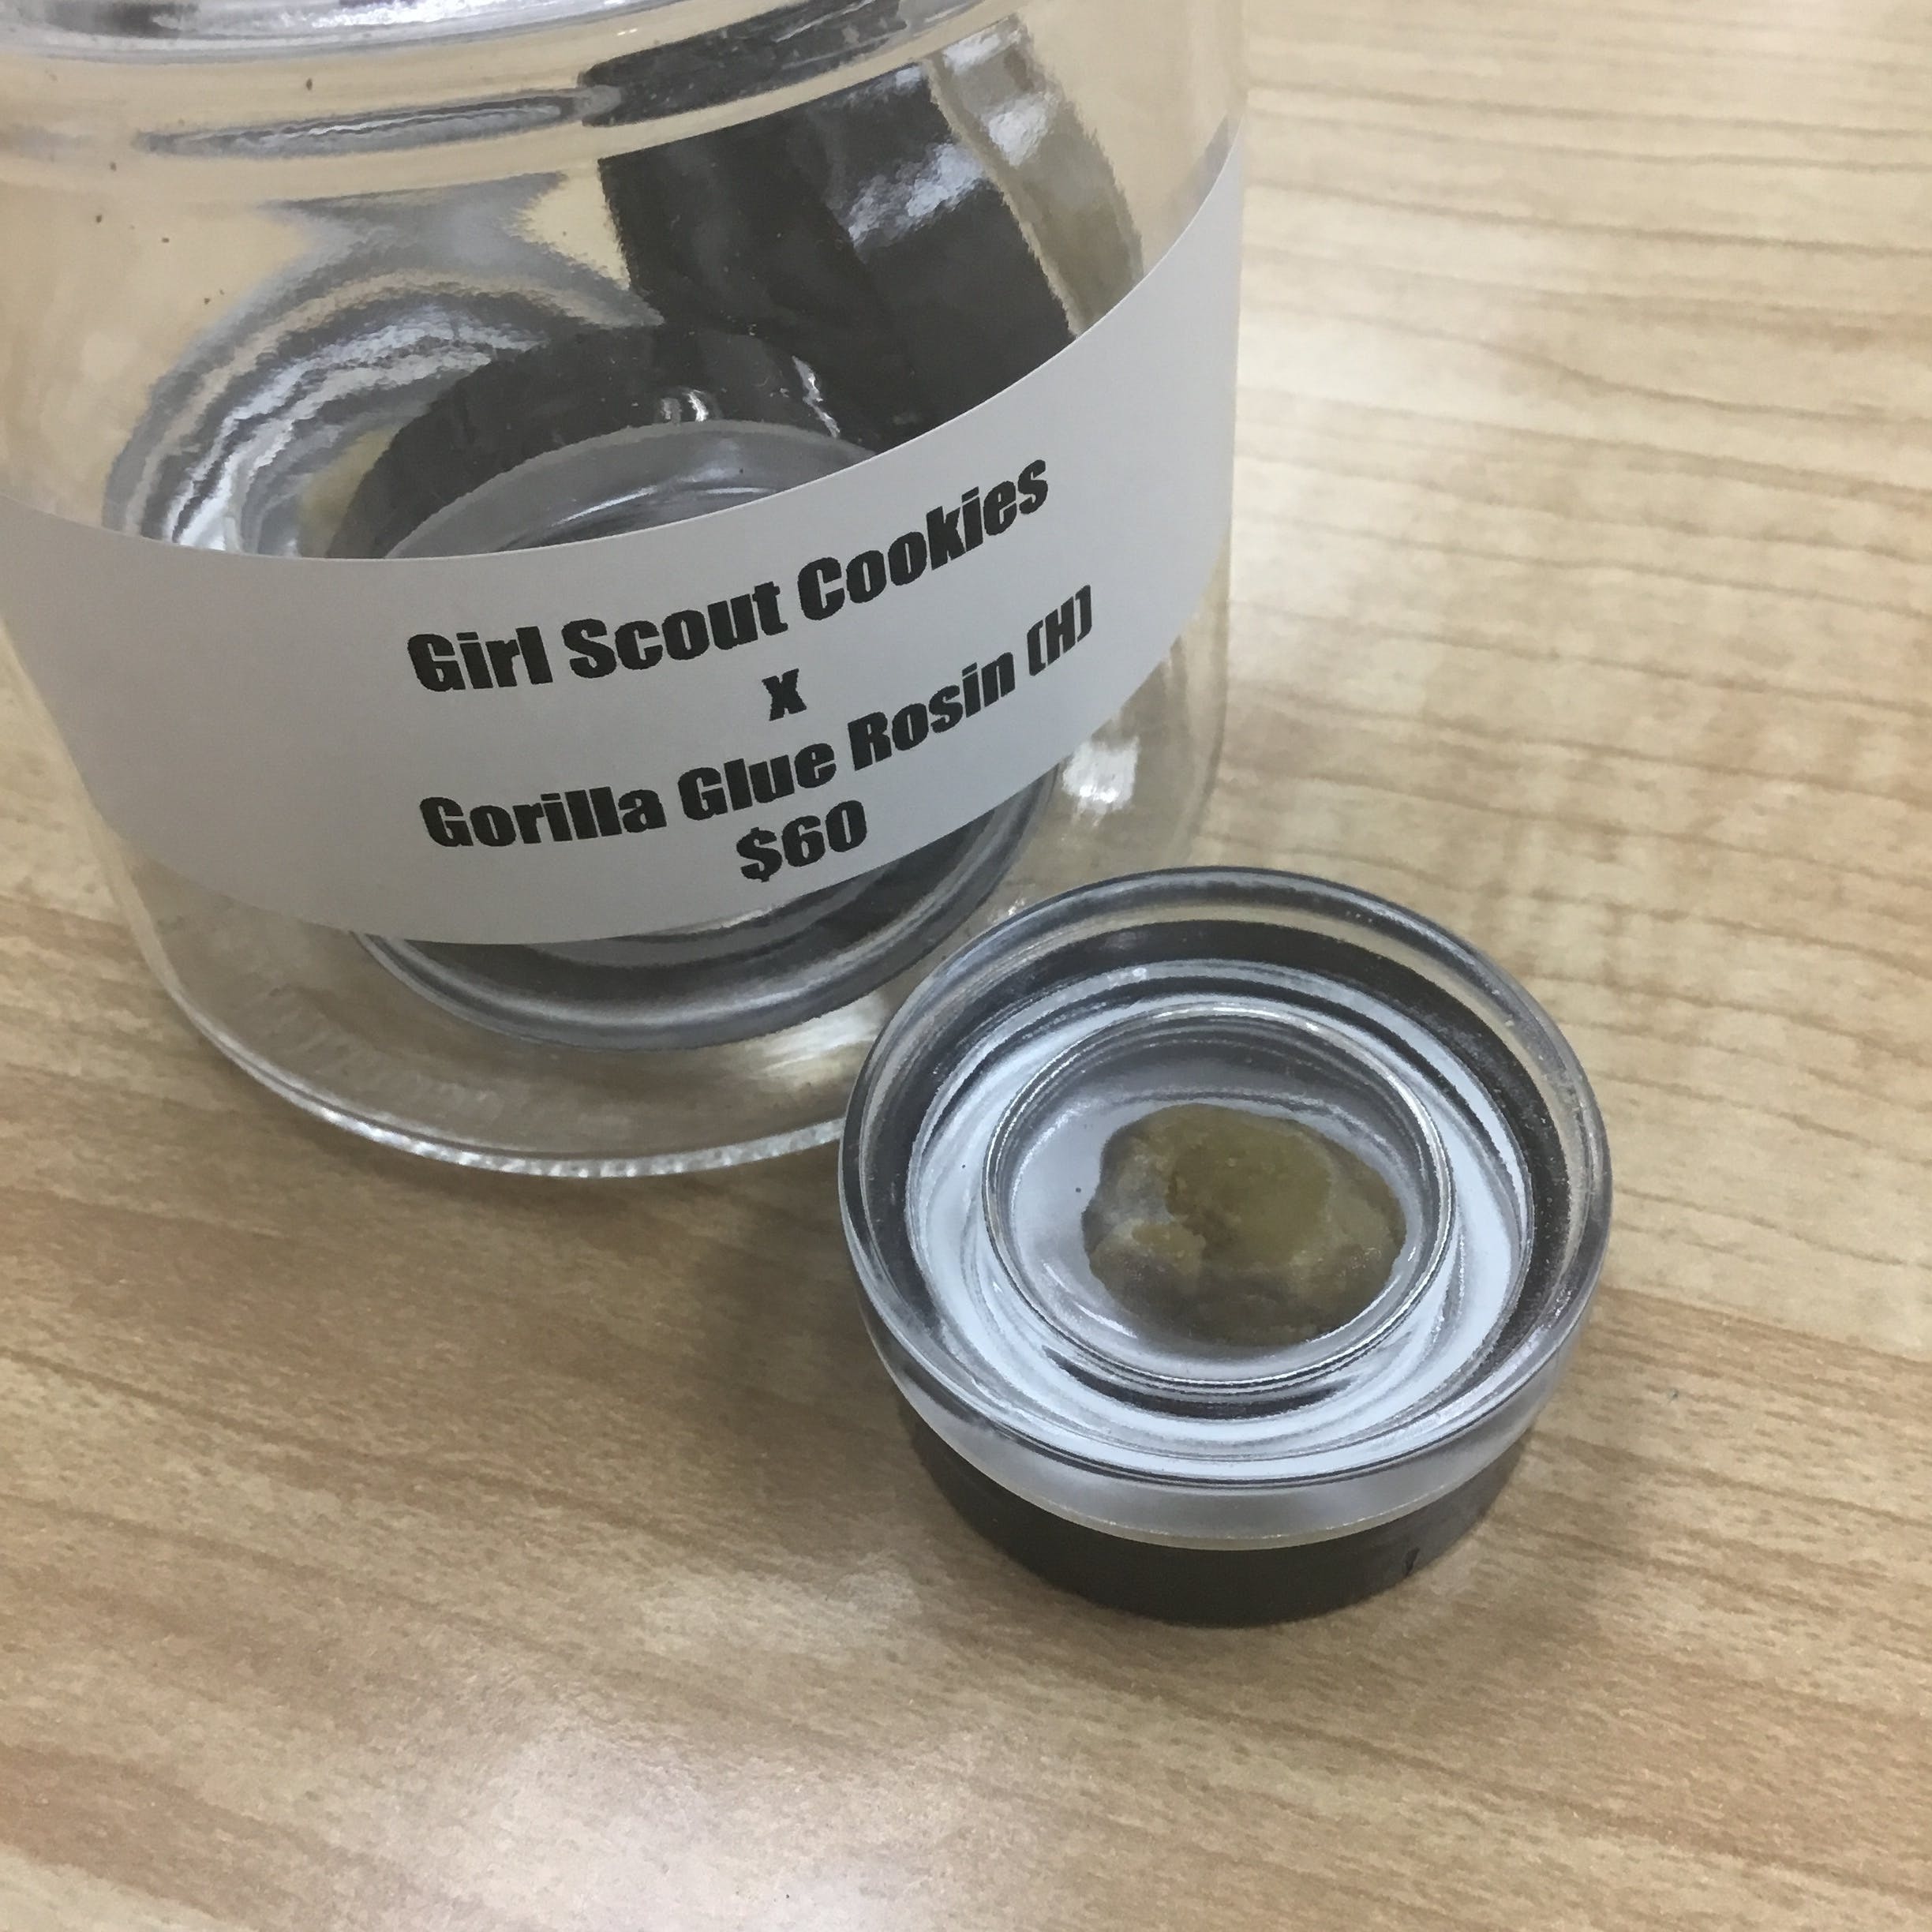 Girl Scout Cookies x Gorilla Glue Rosin